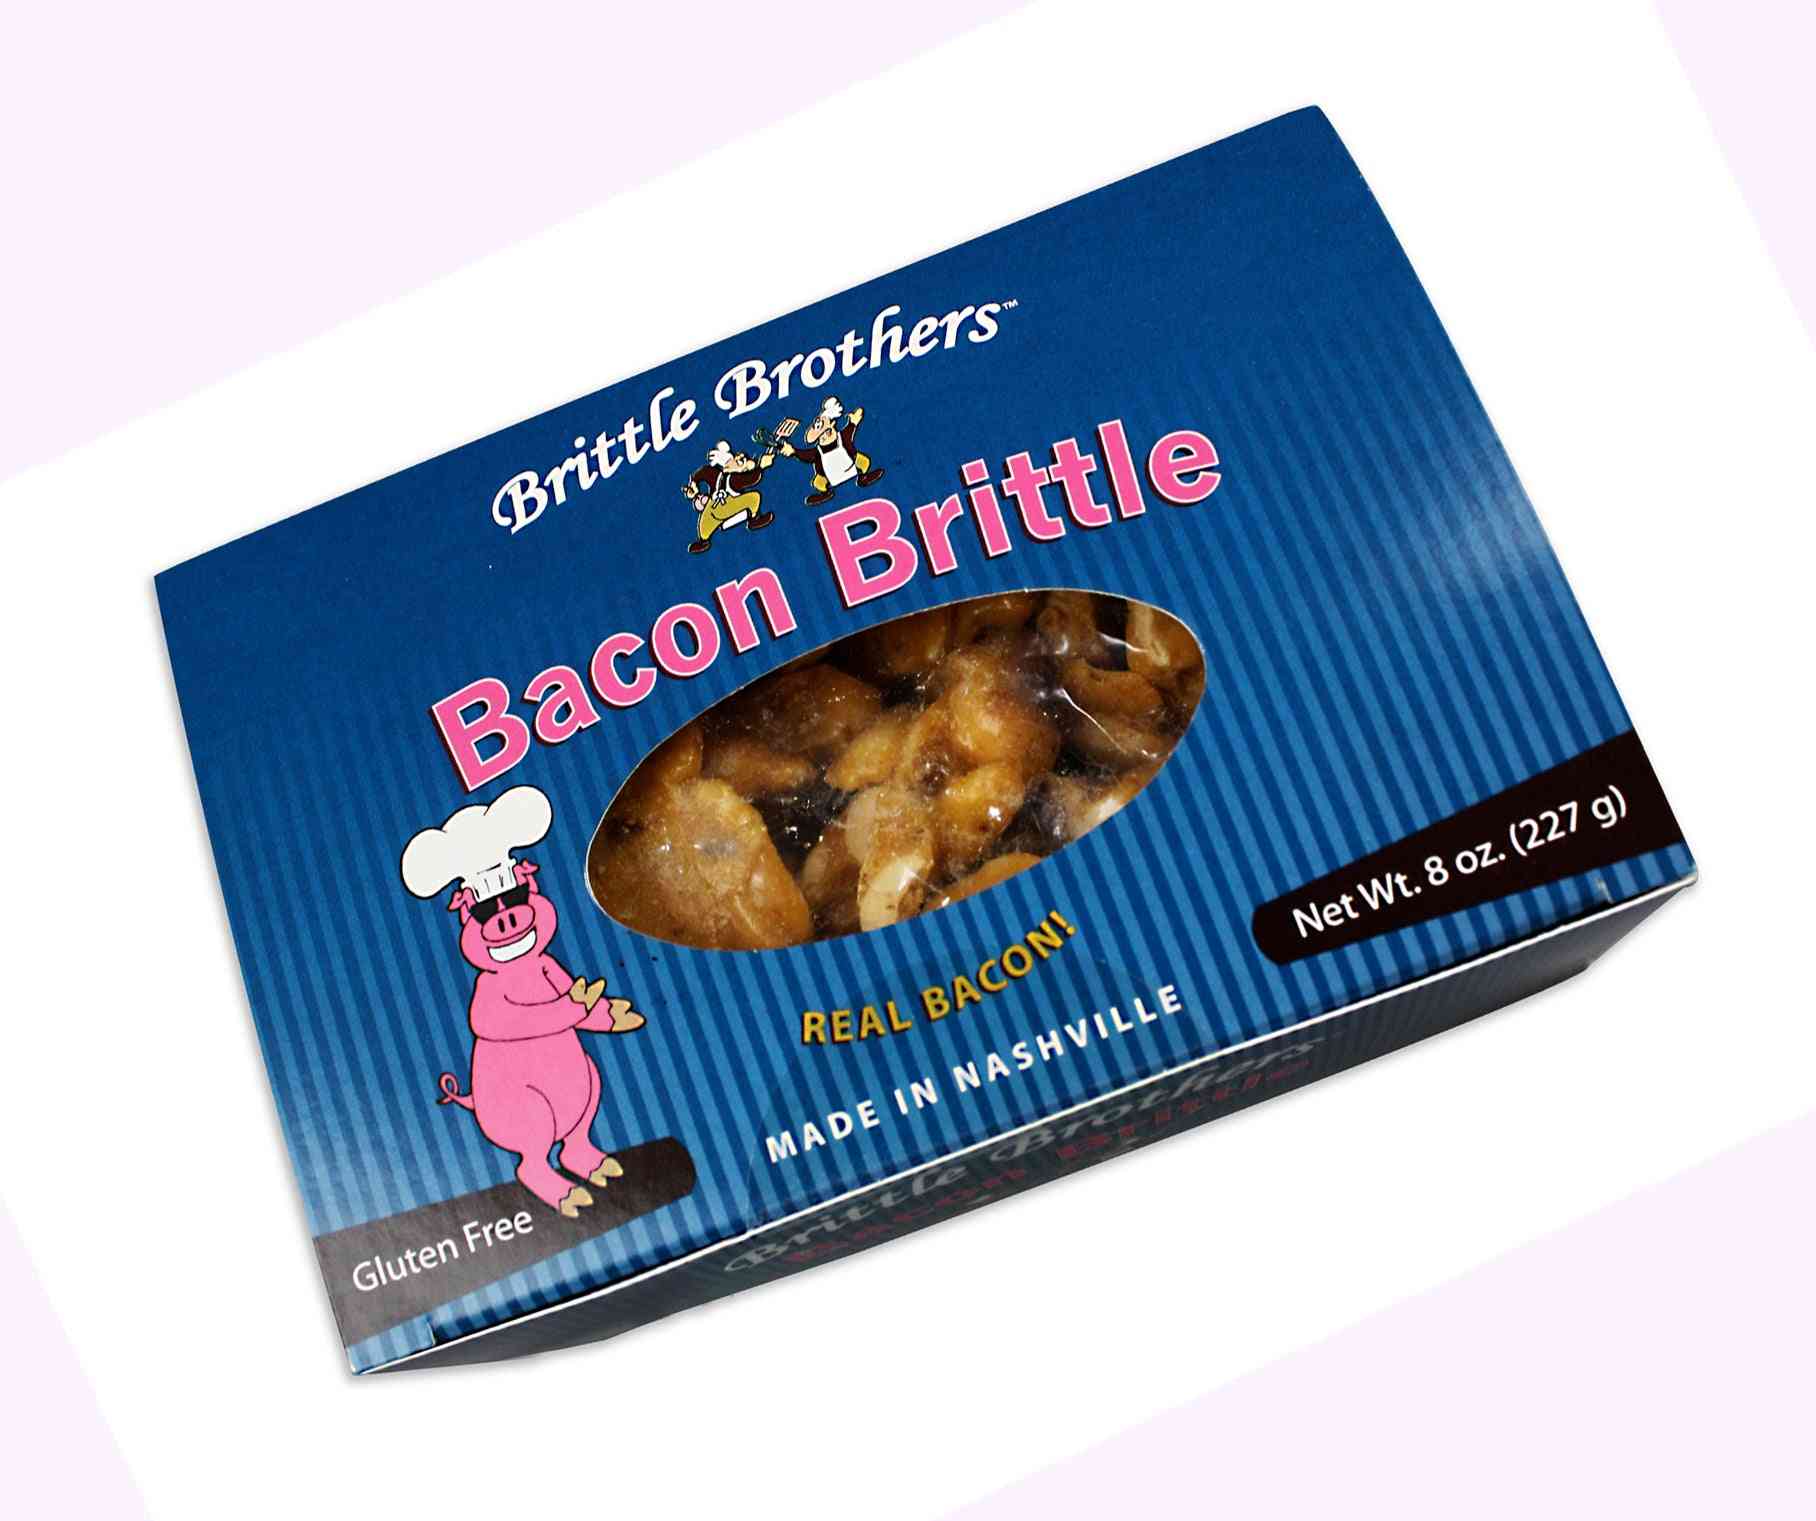 Bacon Peanut Brittle - 8 Oz. Box